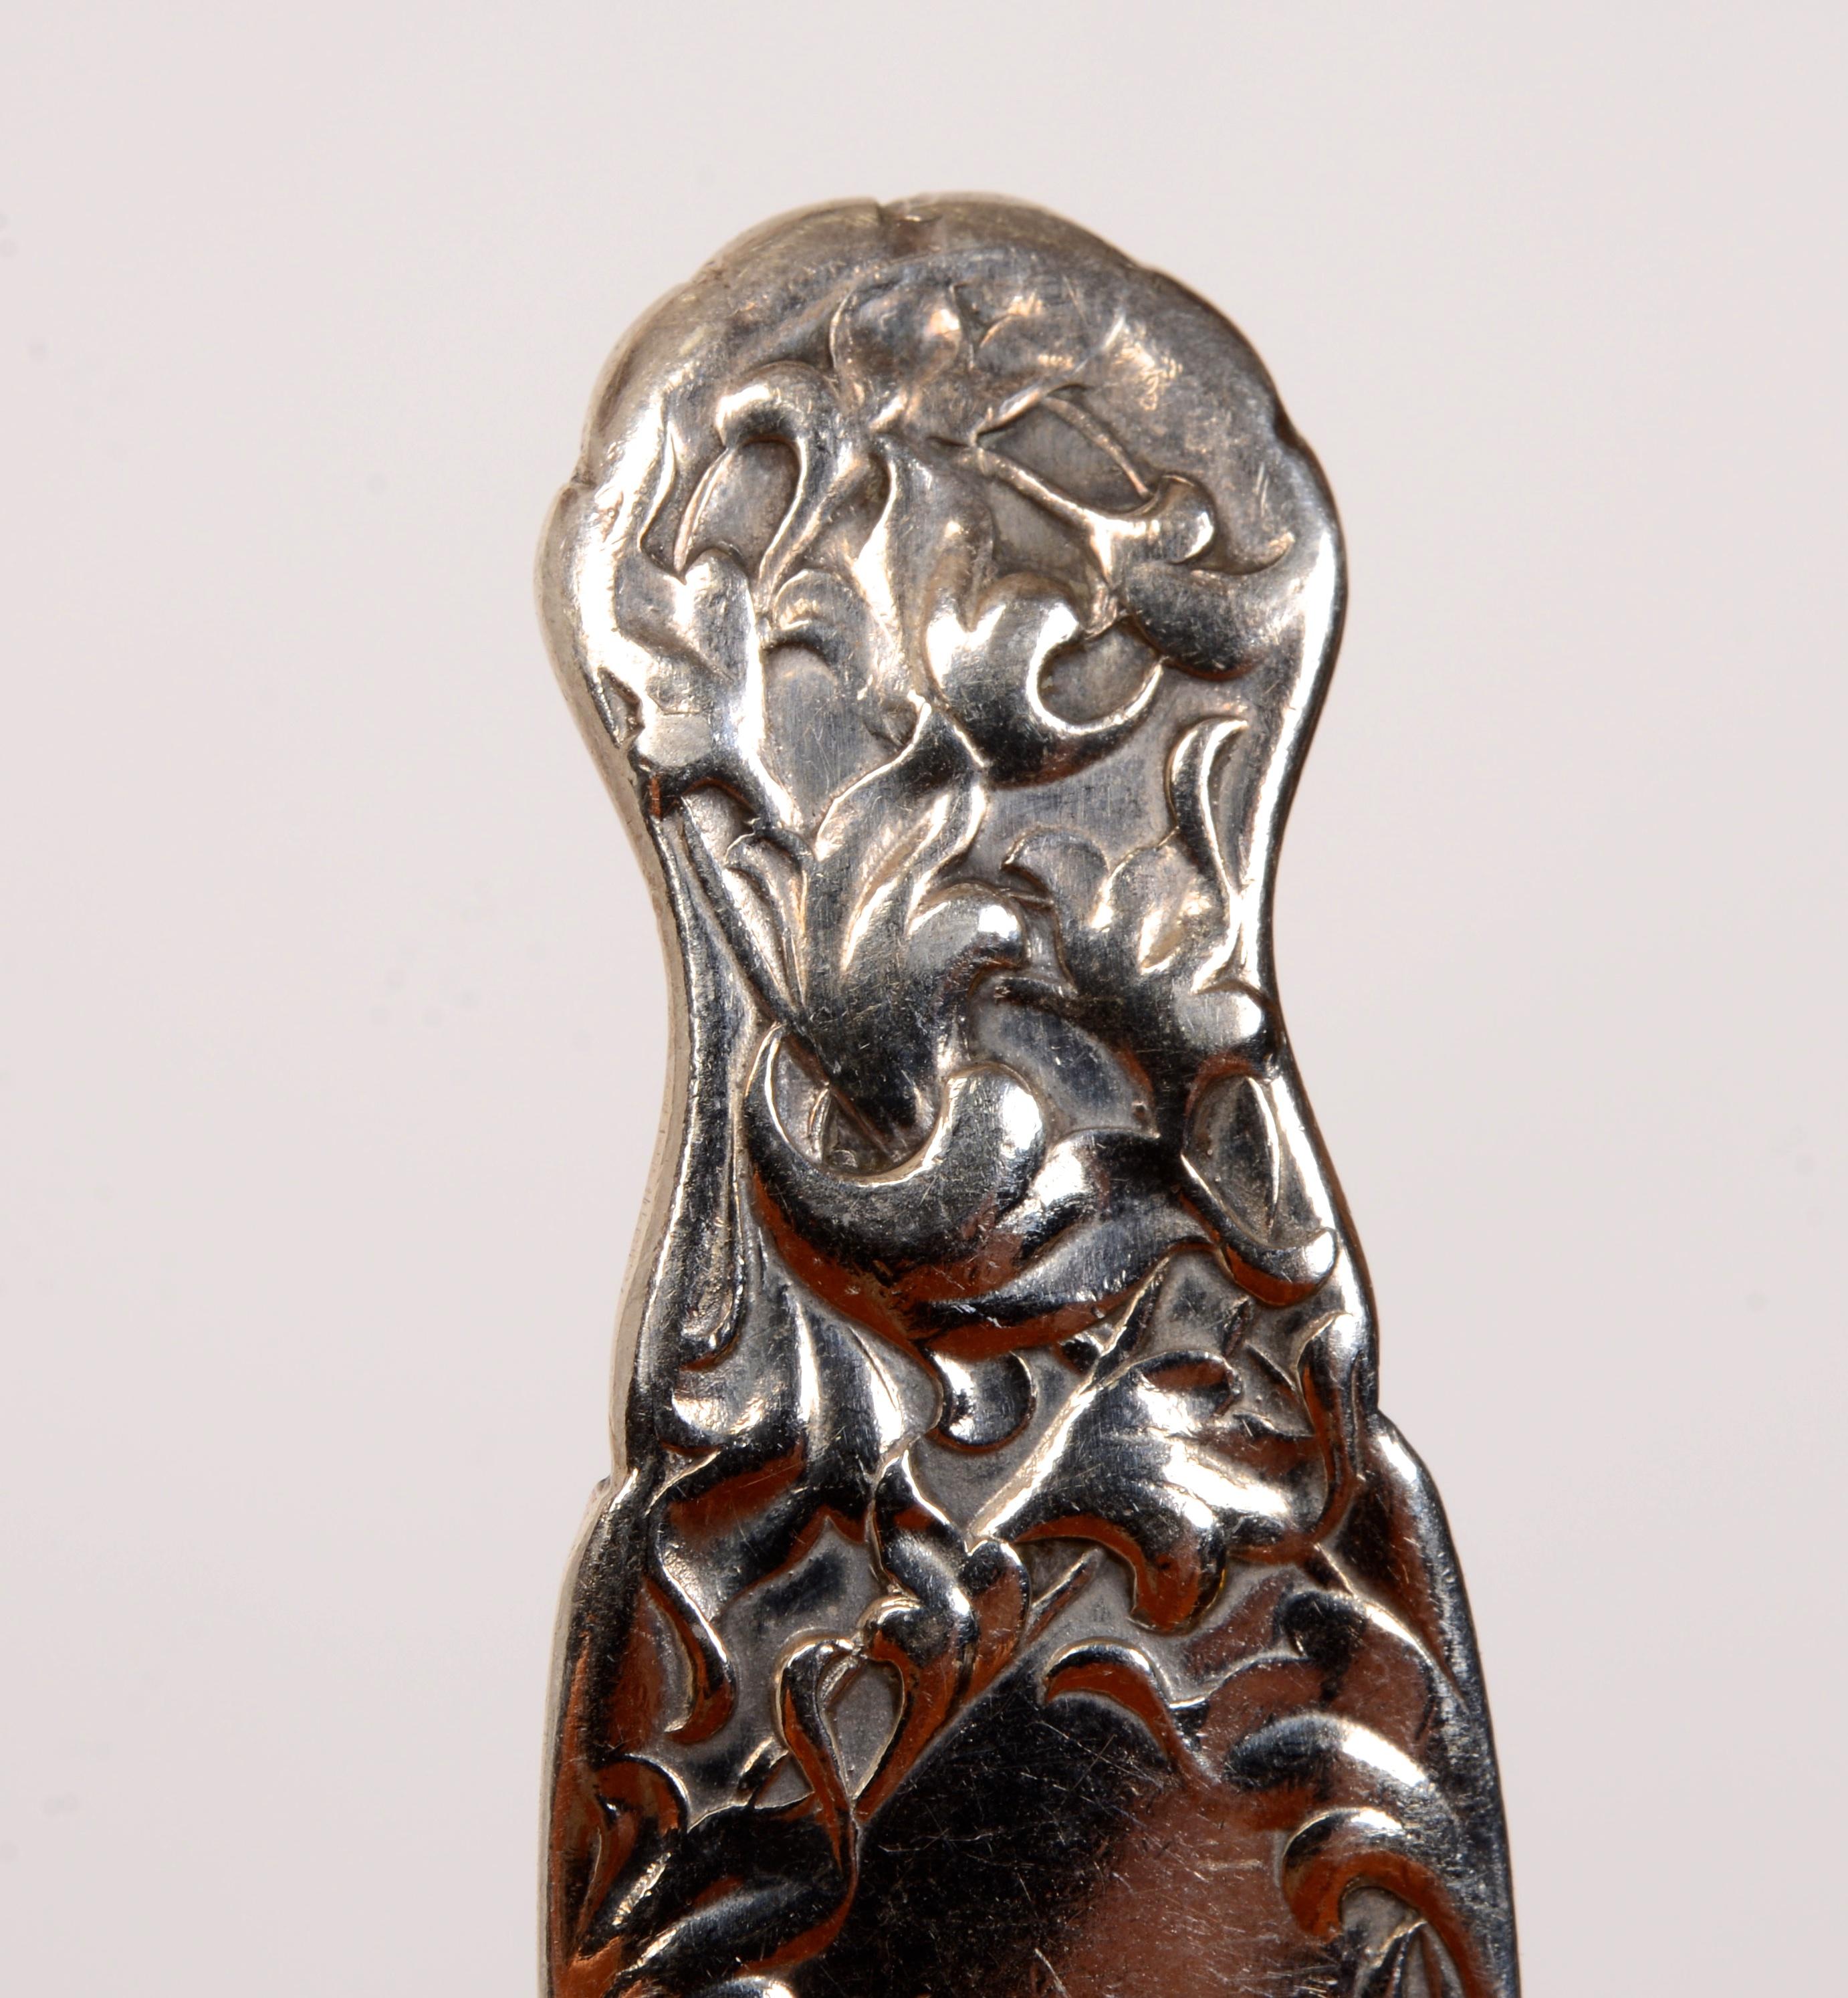 Set of 8 Sterling Silver Teaspoons in the Heraldic Pattern by Meriden/International Silver Company, c1880.